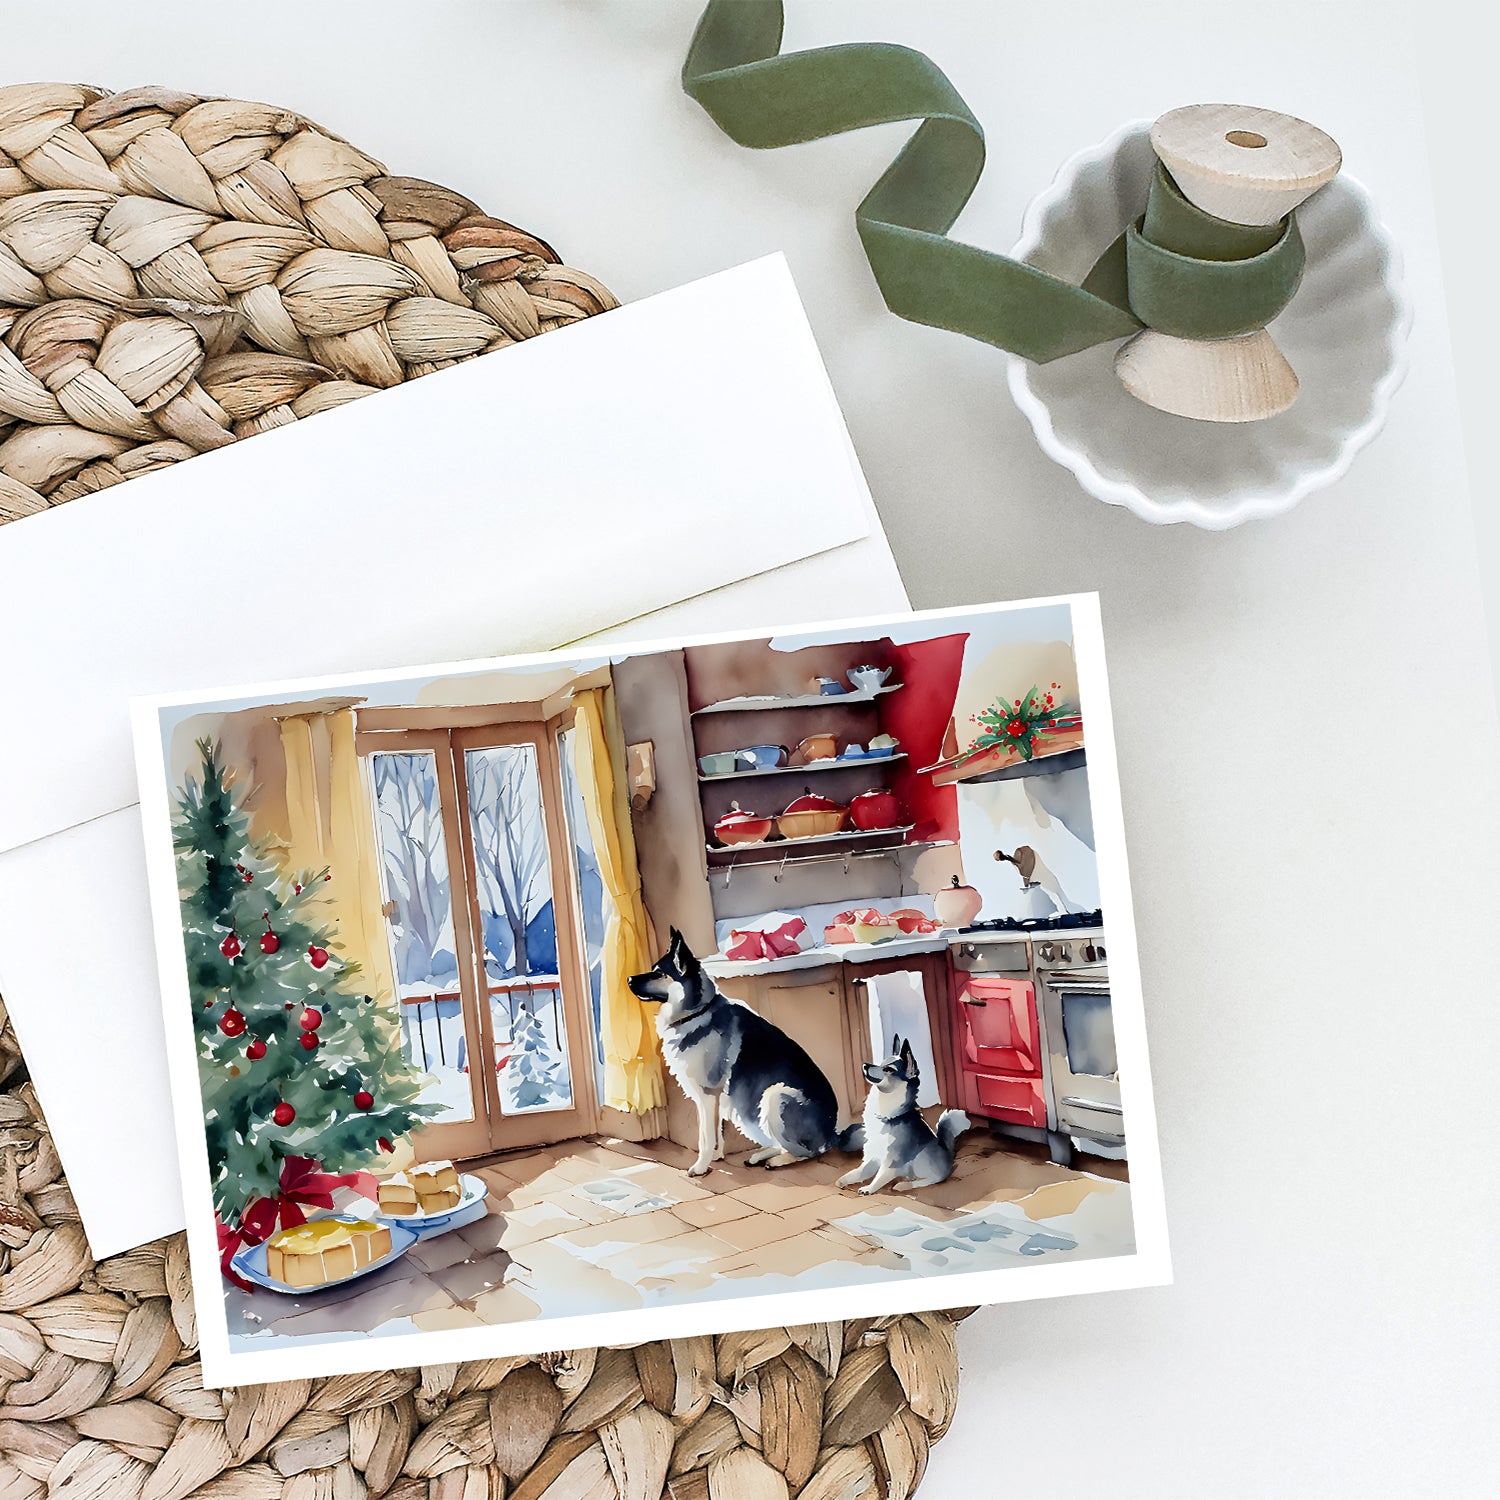 Buy this Norwegian Elkhound Christmas Cookies Greeting Cards Pack of 8